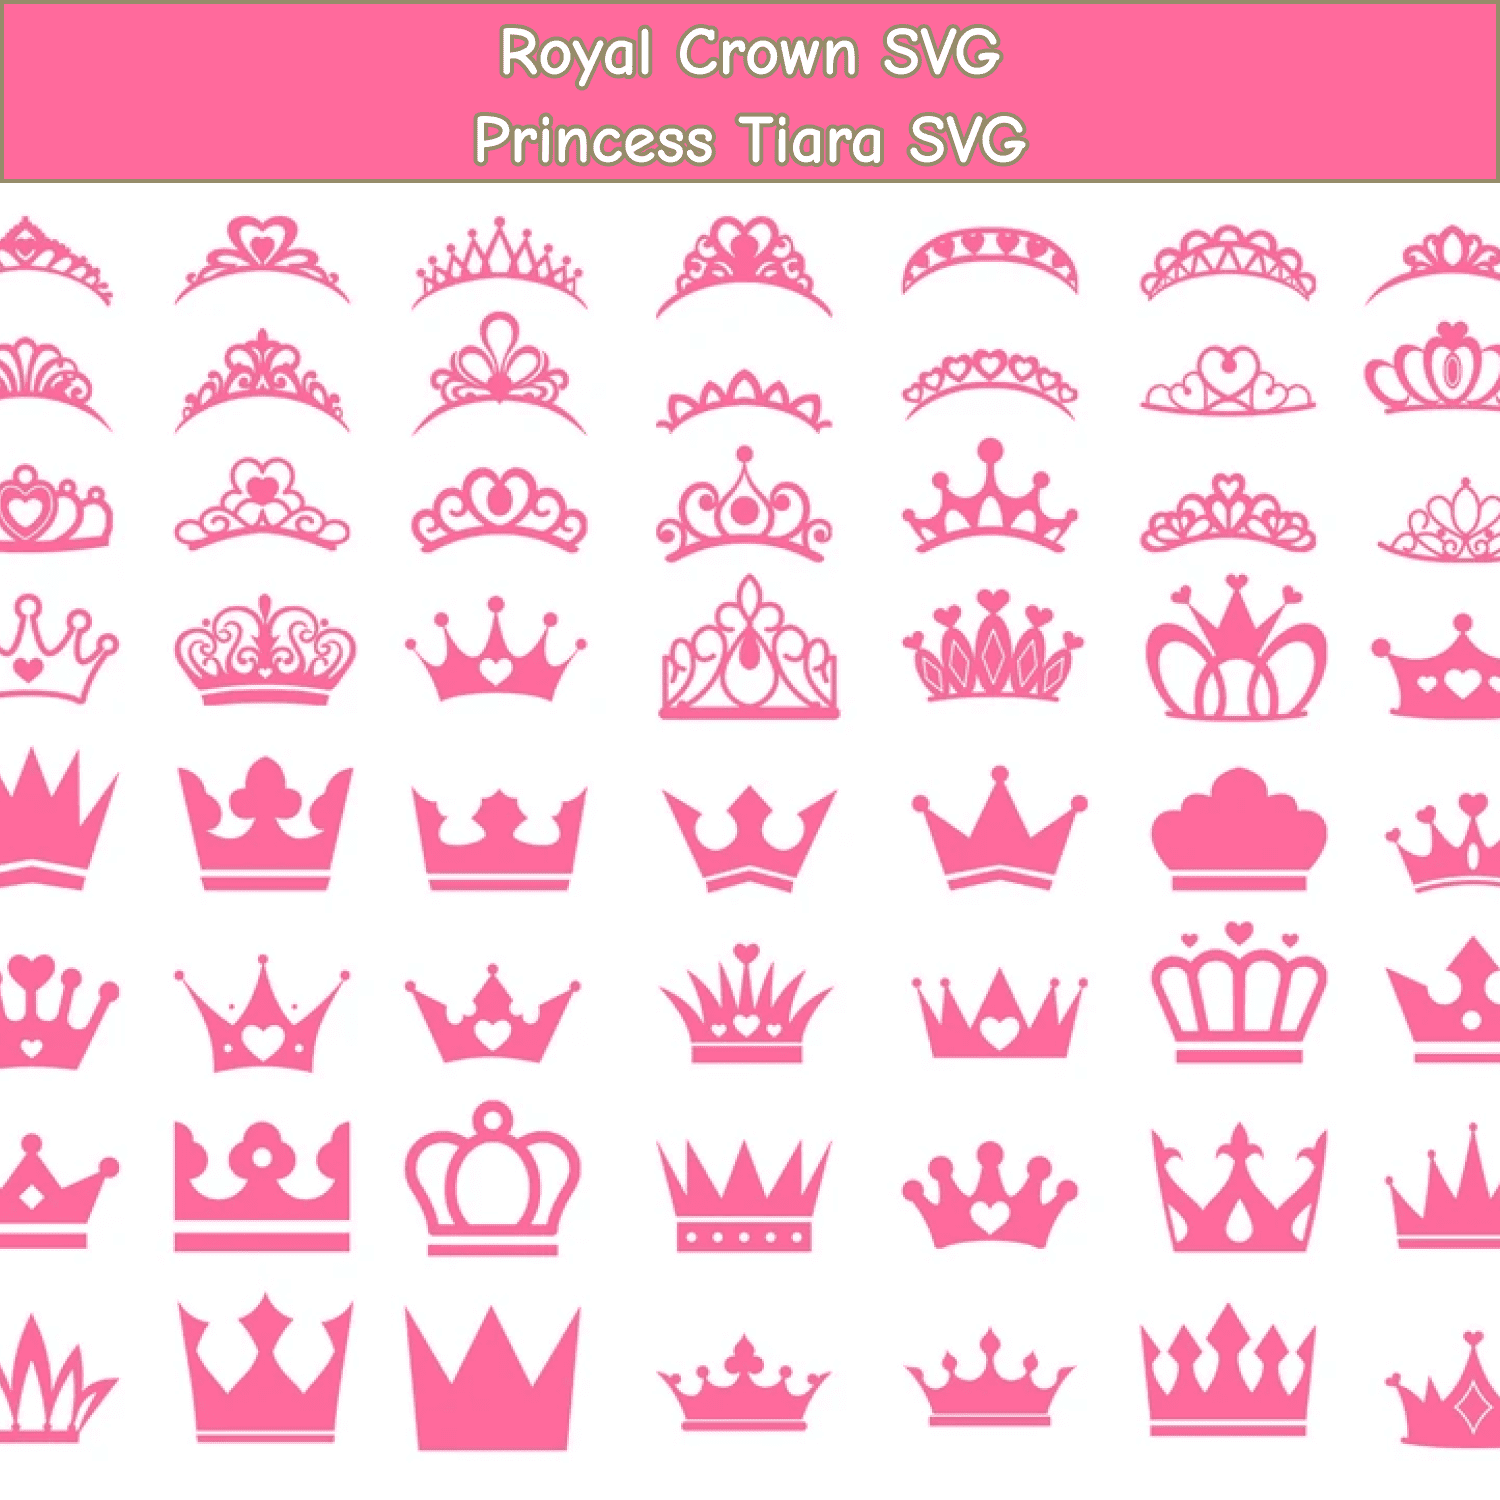 Princess Tiara SVG Files image.